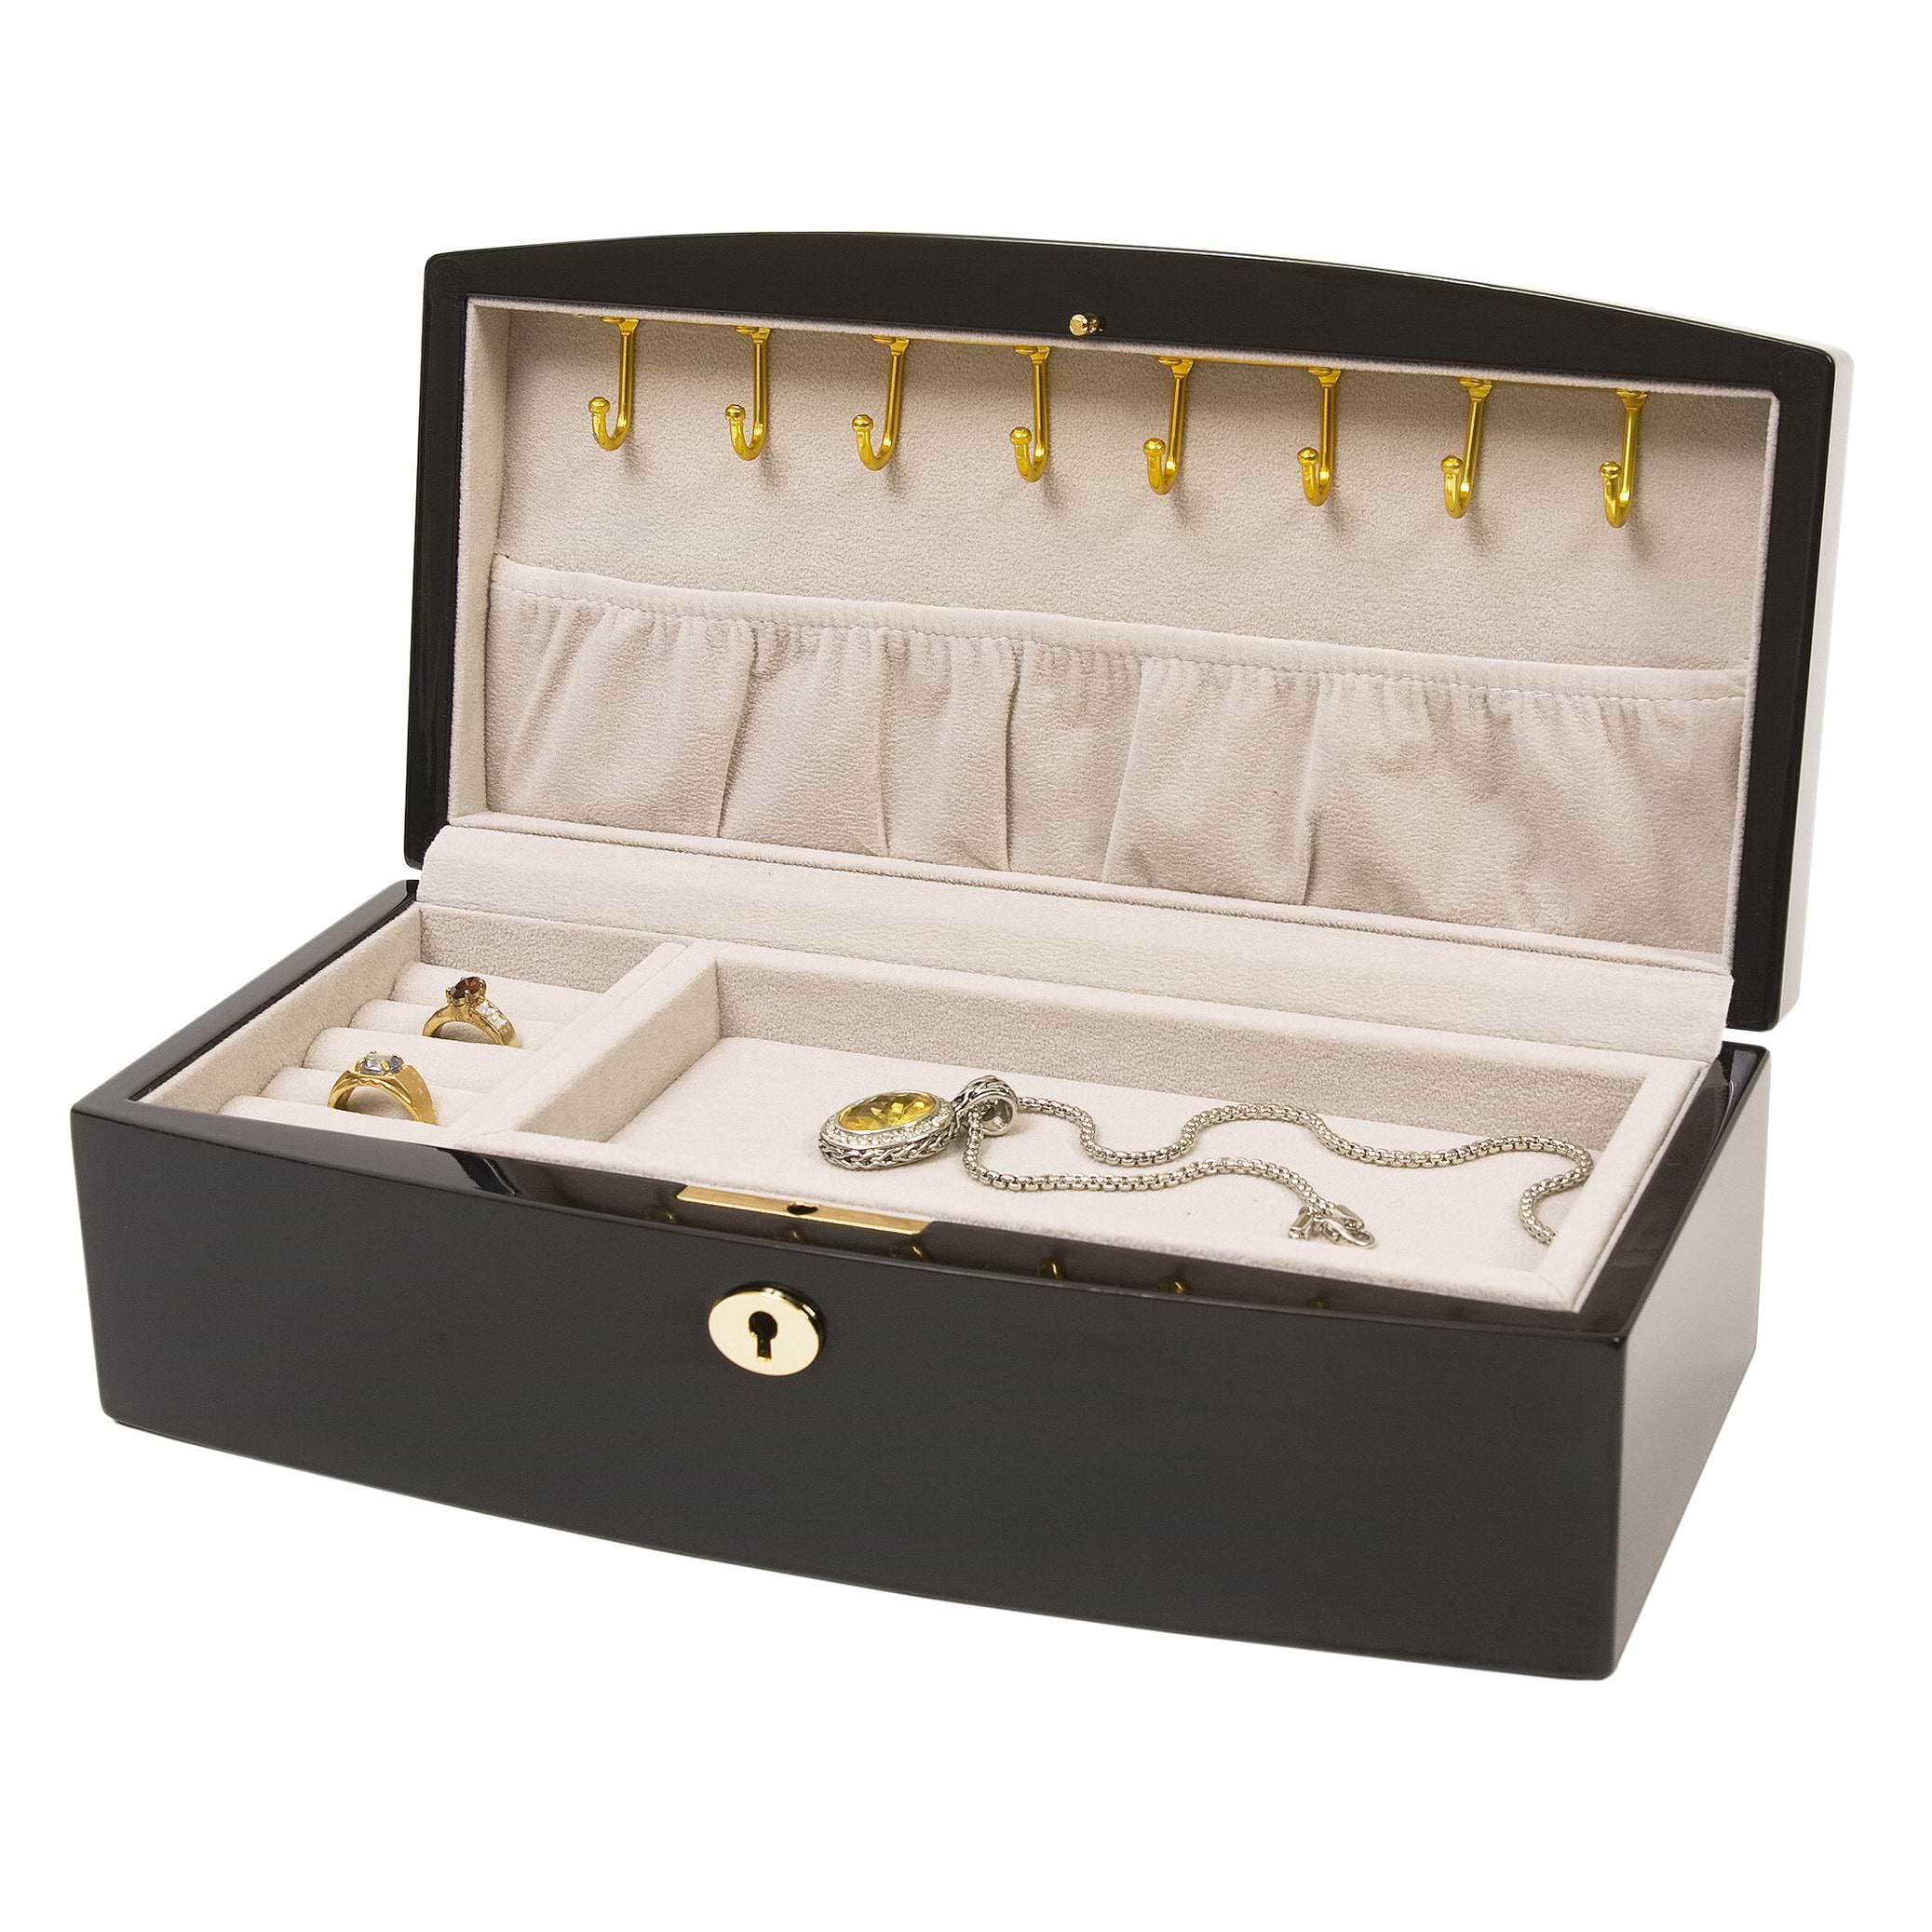 Italian Inlaid Burlwood Jewelry Box w Necklace Hooks & Lift-out Tray